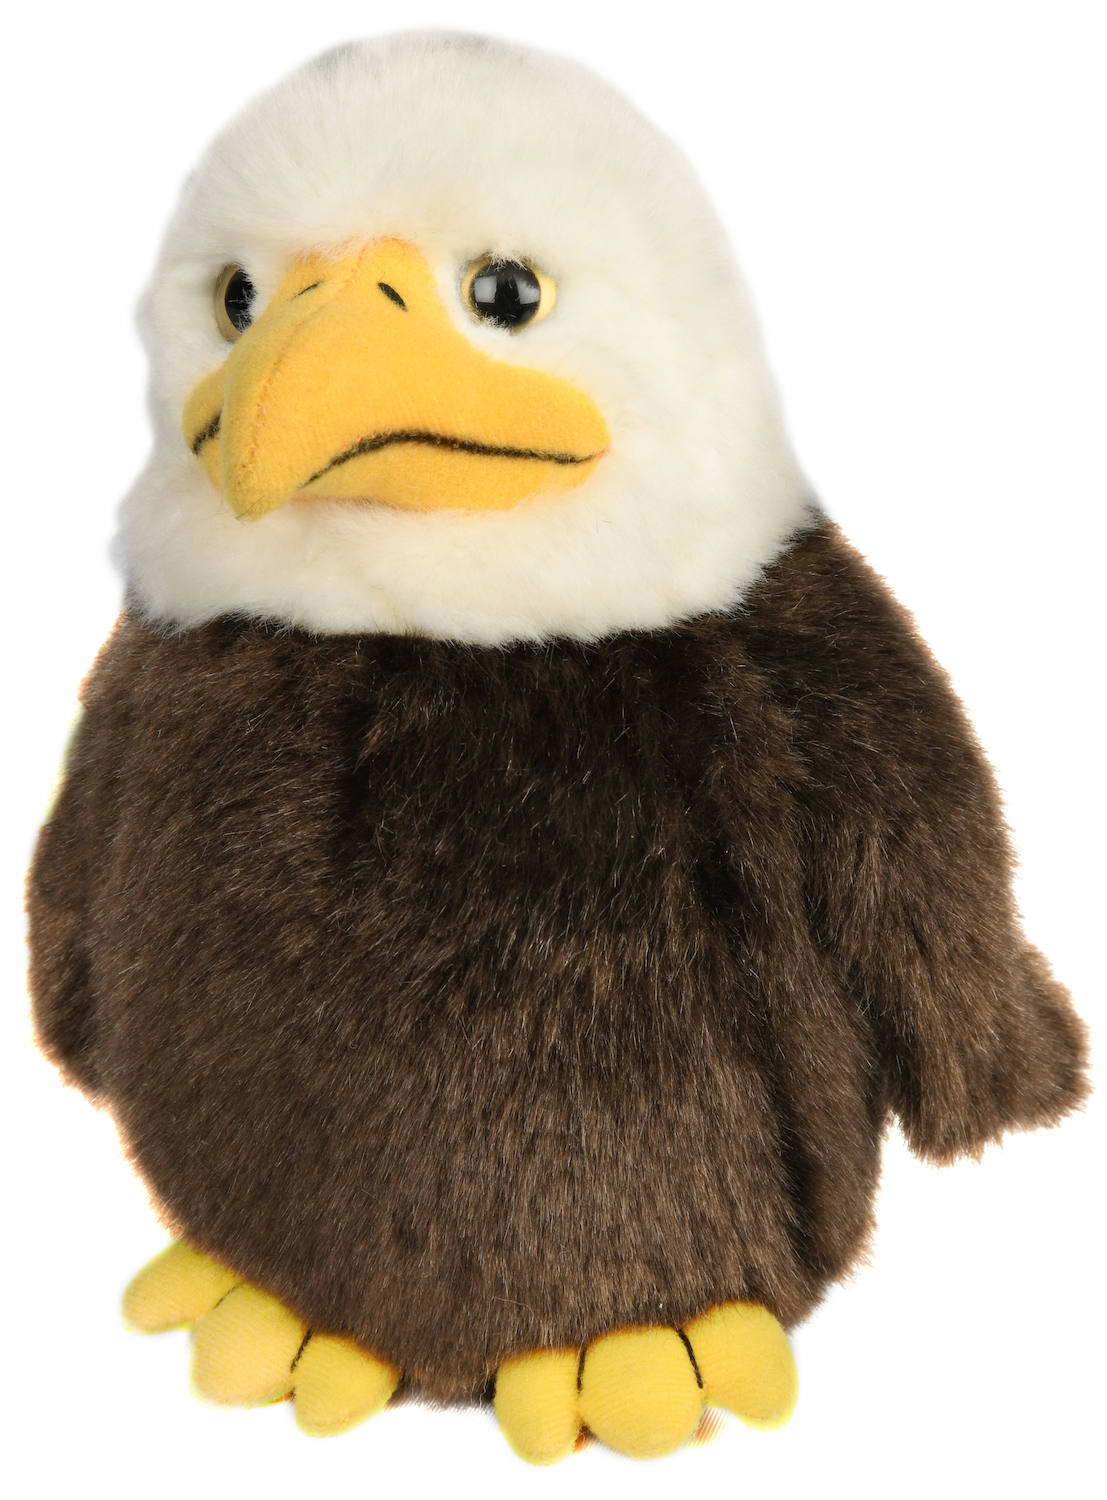 Bald Eagle Young Bird - 18 cm (height) - Plush Bird, Eagle - Soft Toy, Cuddly Toy